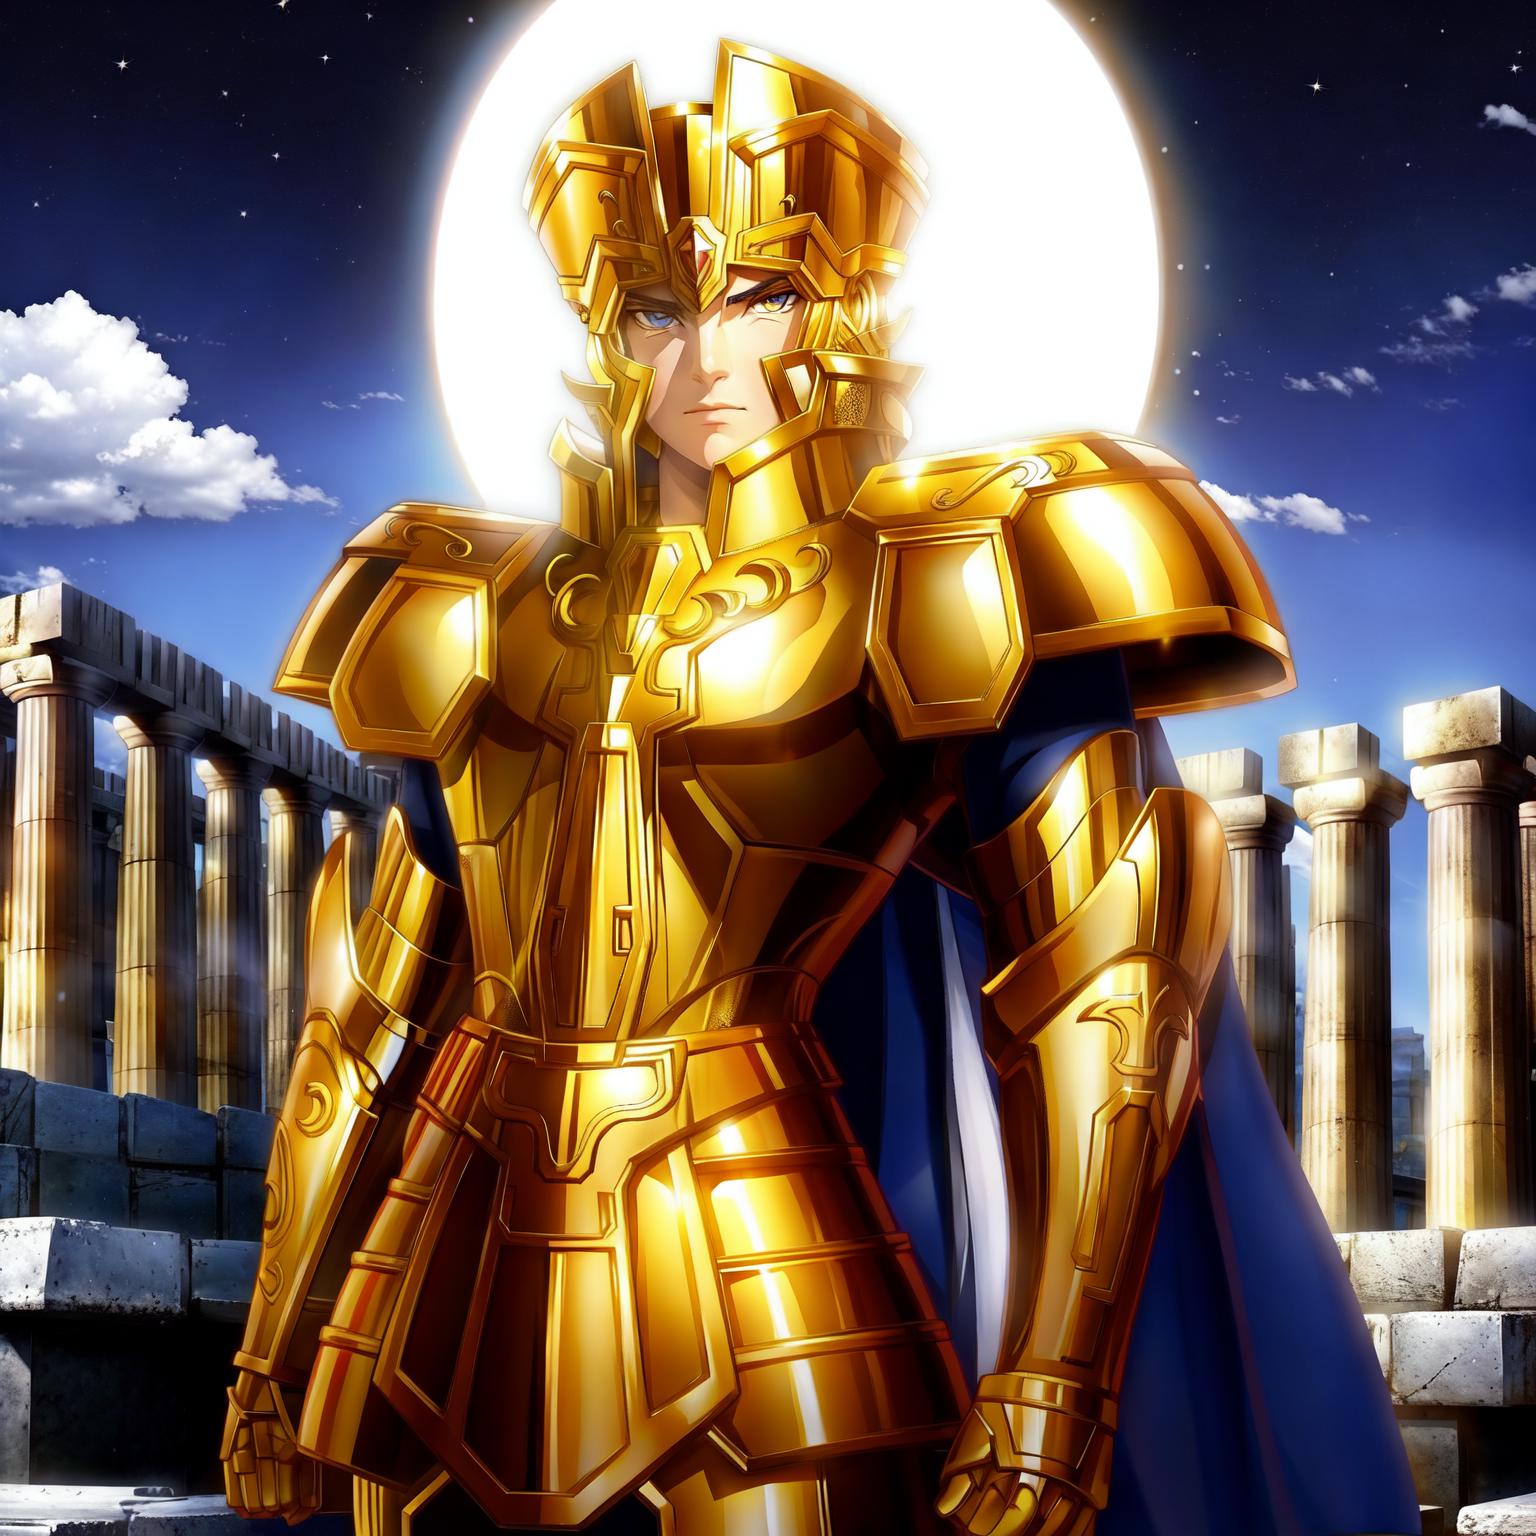 Saint Seiya Gemini Armor image by evileliot